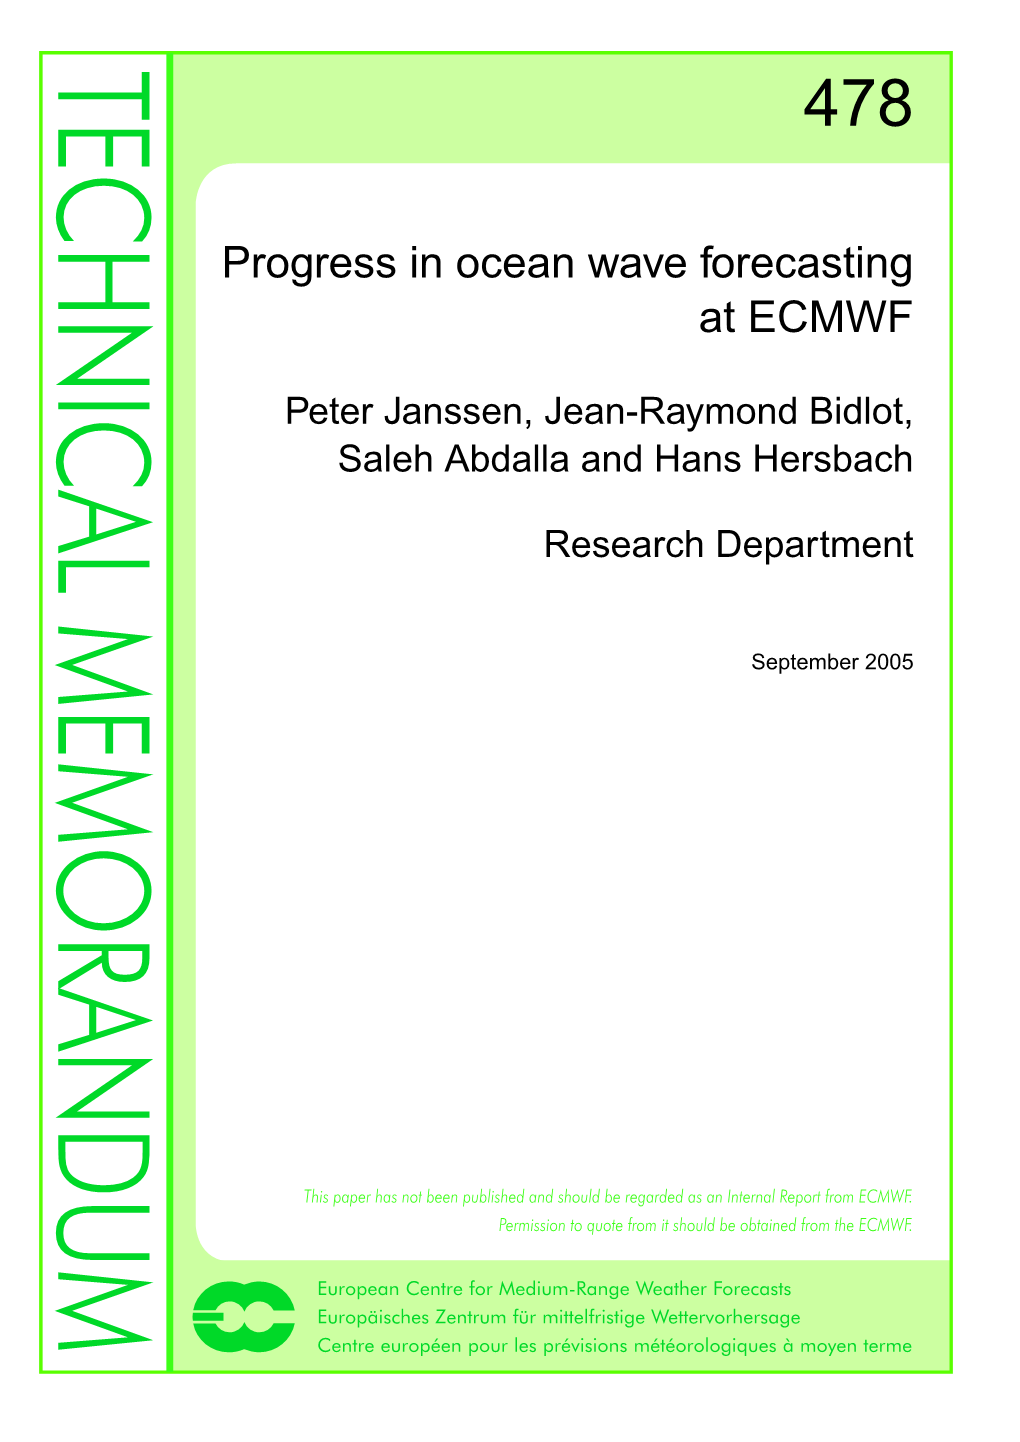 Progress in Ocean Wave Forecasting at ECMWF